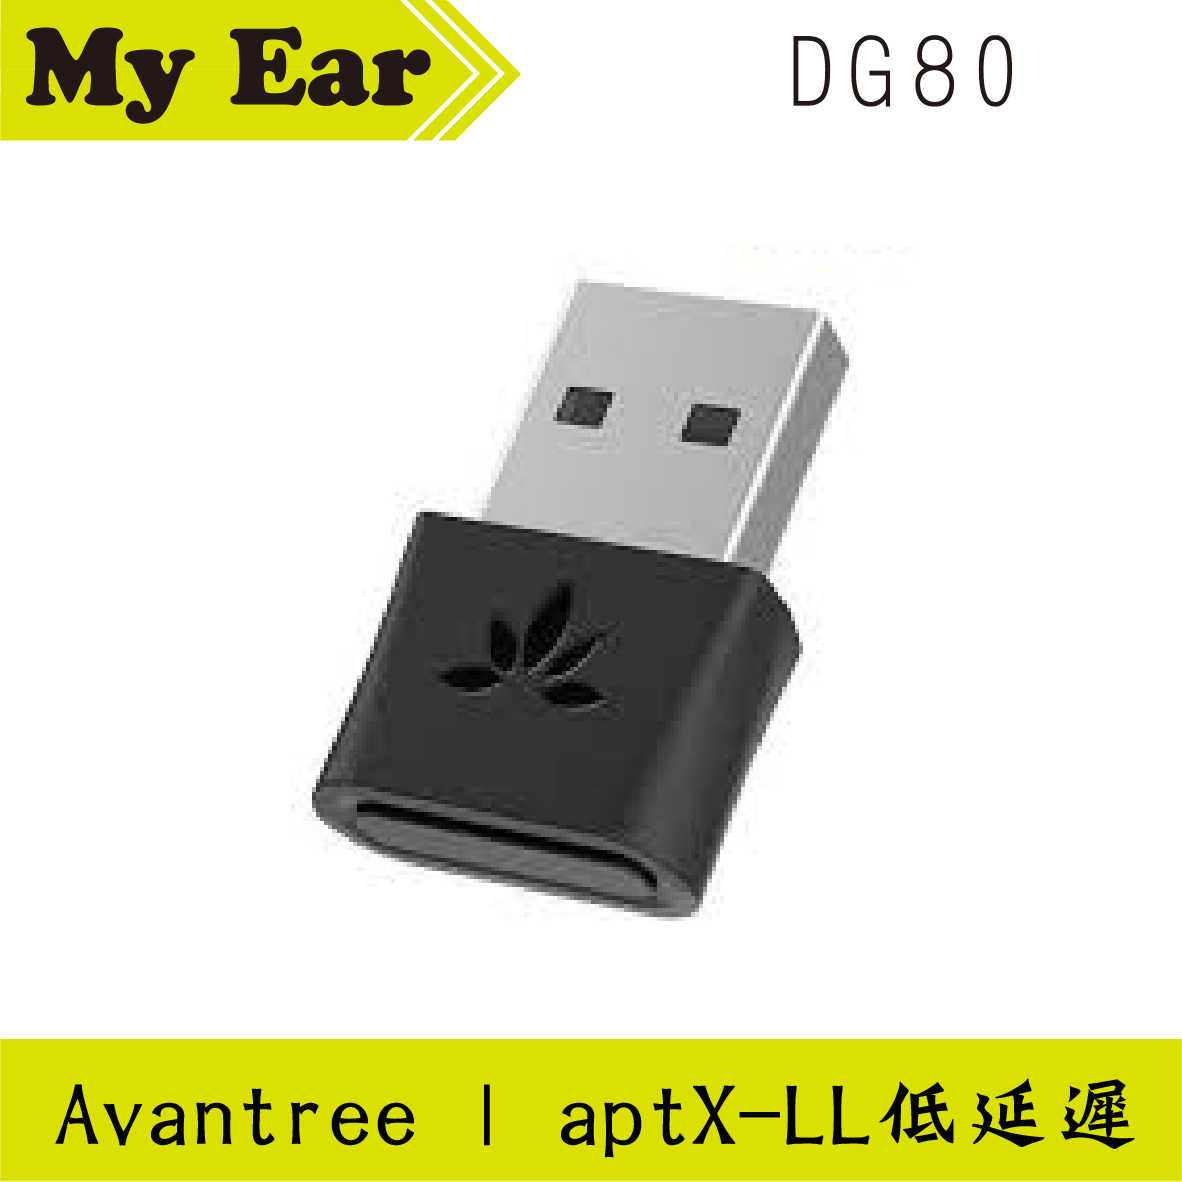 Avantree DG80 低延遲 攜帶 藍芽 音樂發射器 | My Ear 耳機專門店